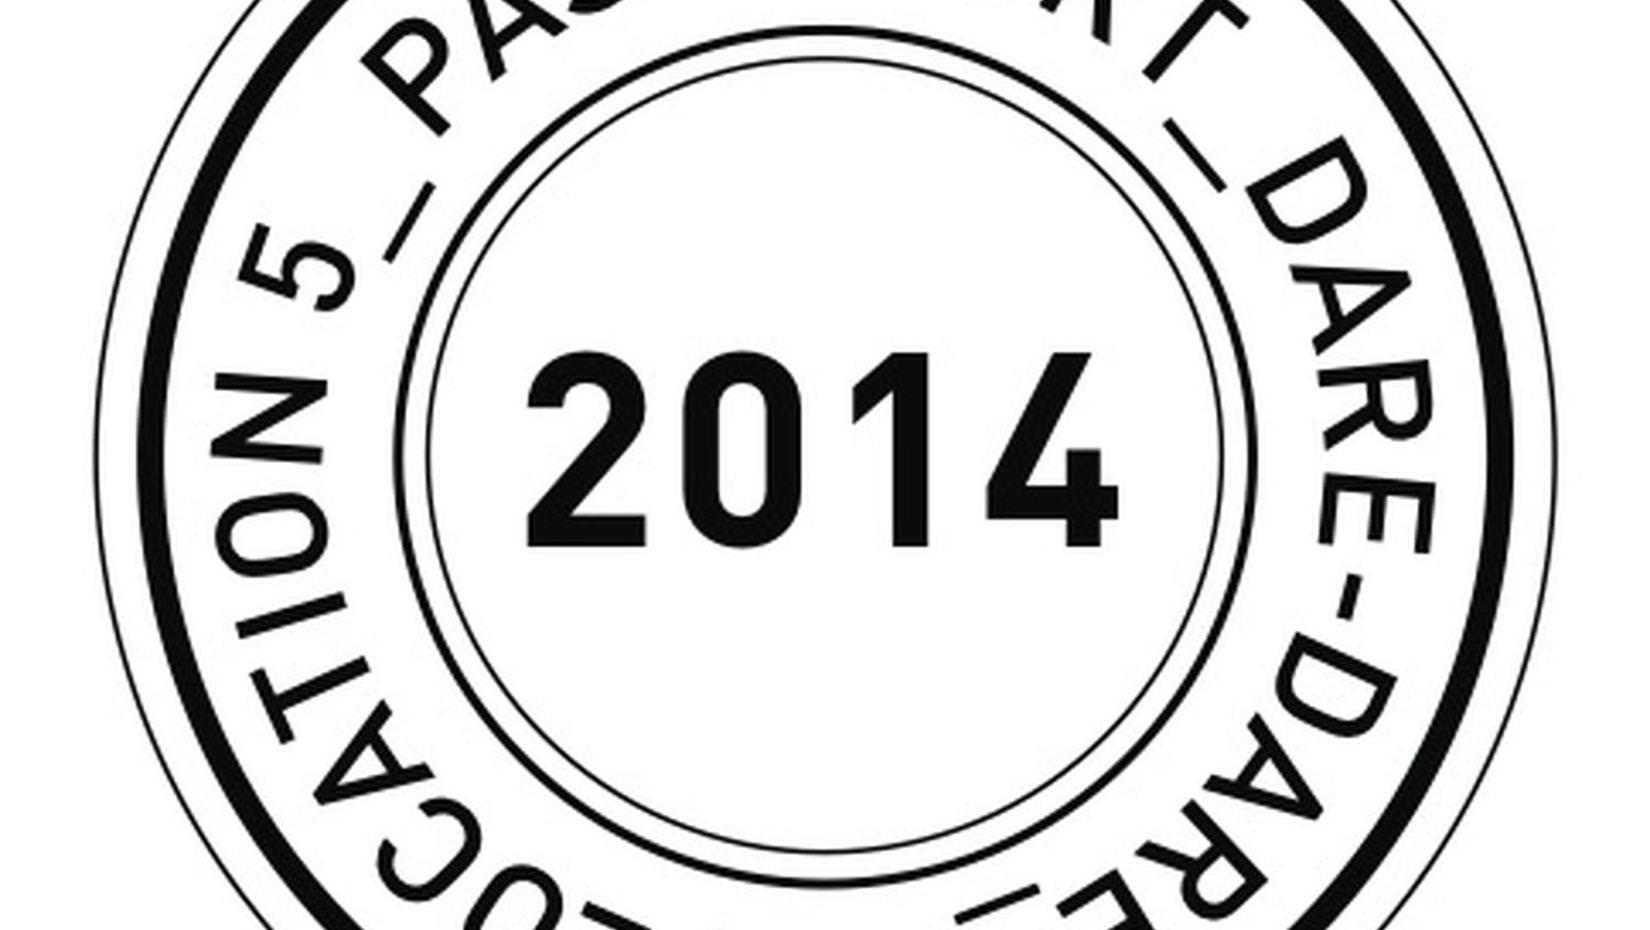 PASSEPORT 2014 + FESTIVE EVENING